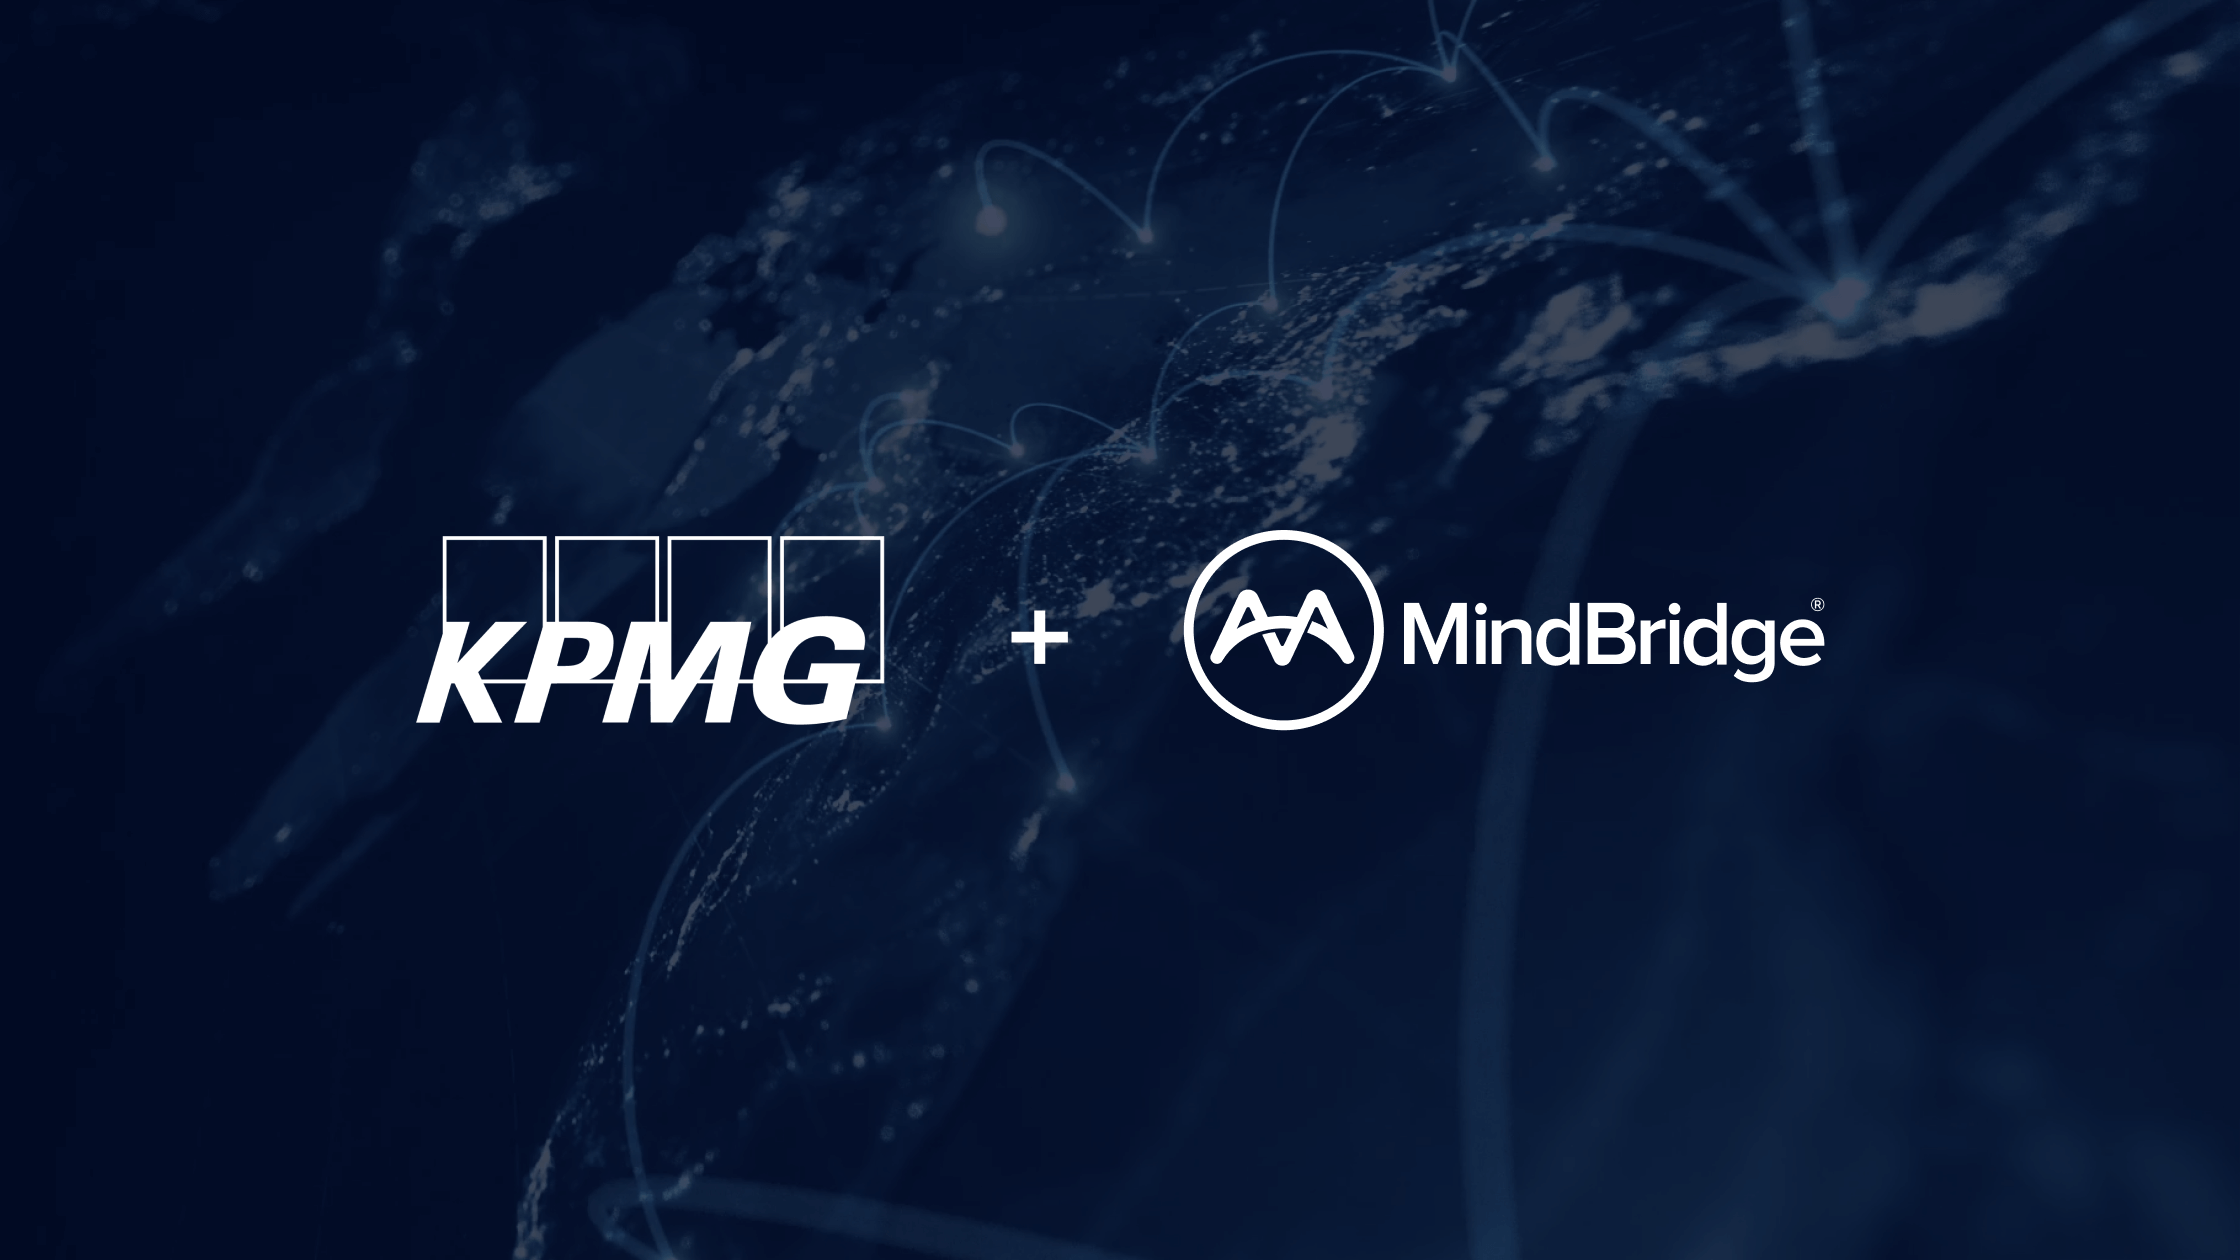 KPMG and MindBridge forge global alliance to transform digital audits